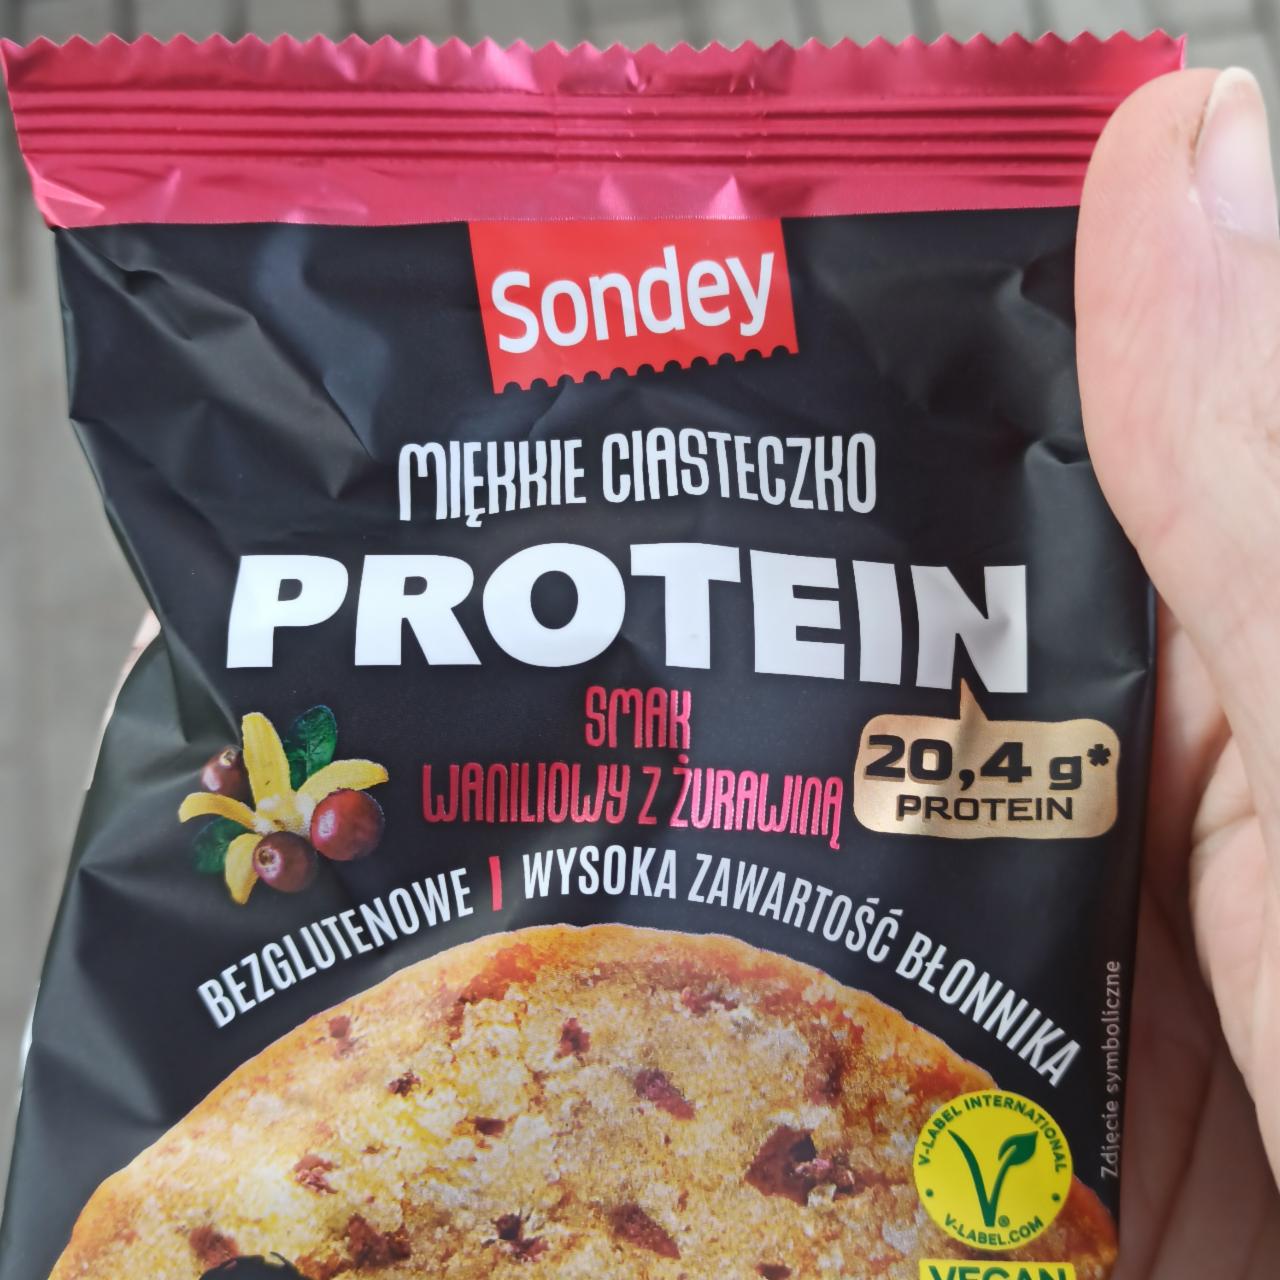 Фото - Miękkie ciasteczko protein Sondey